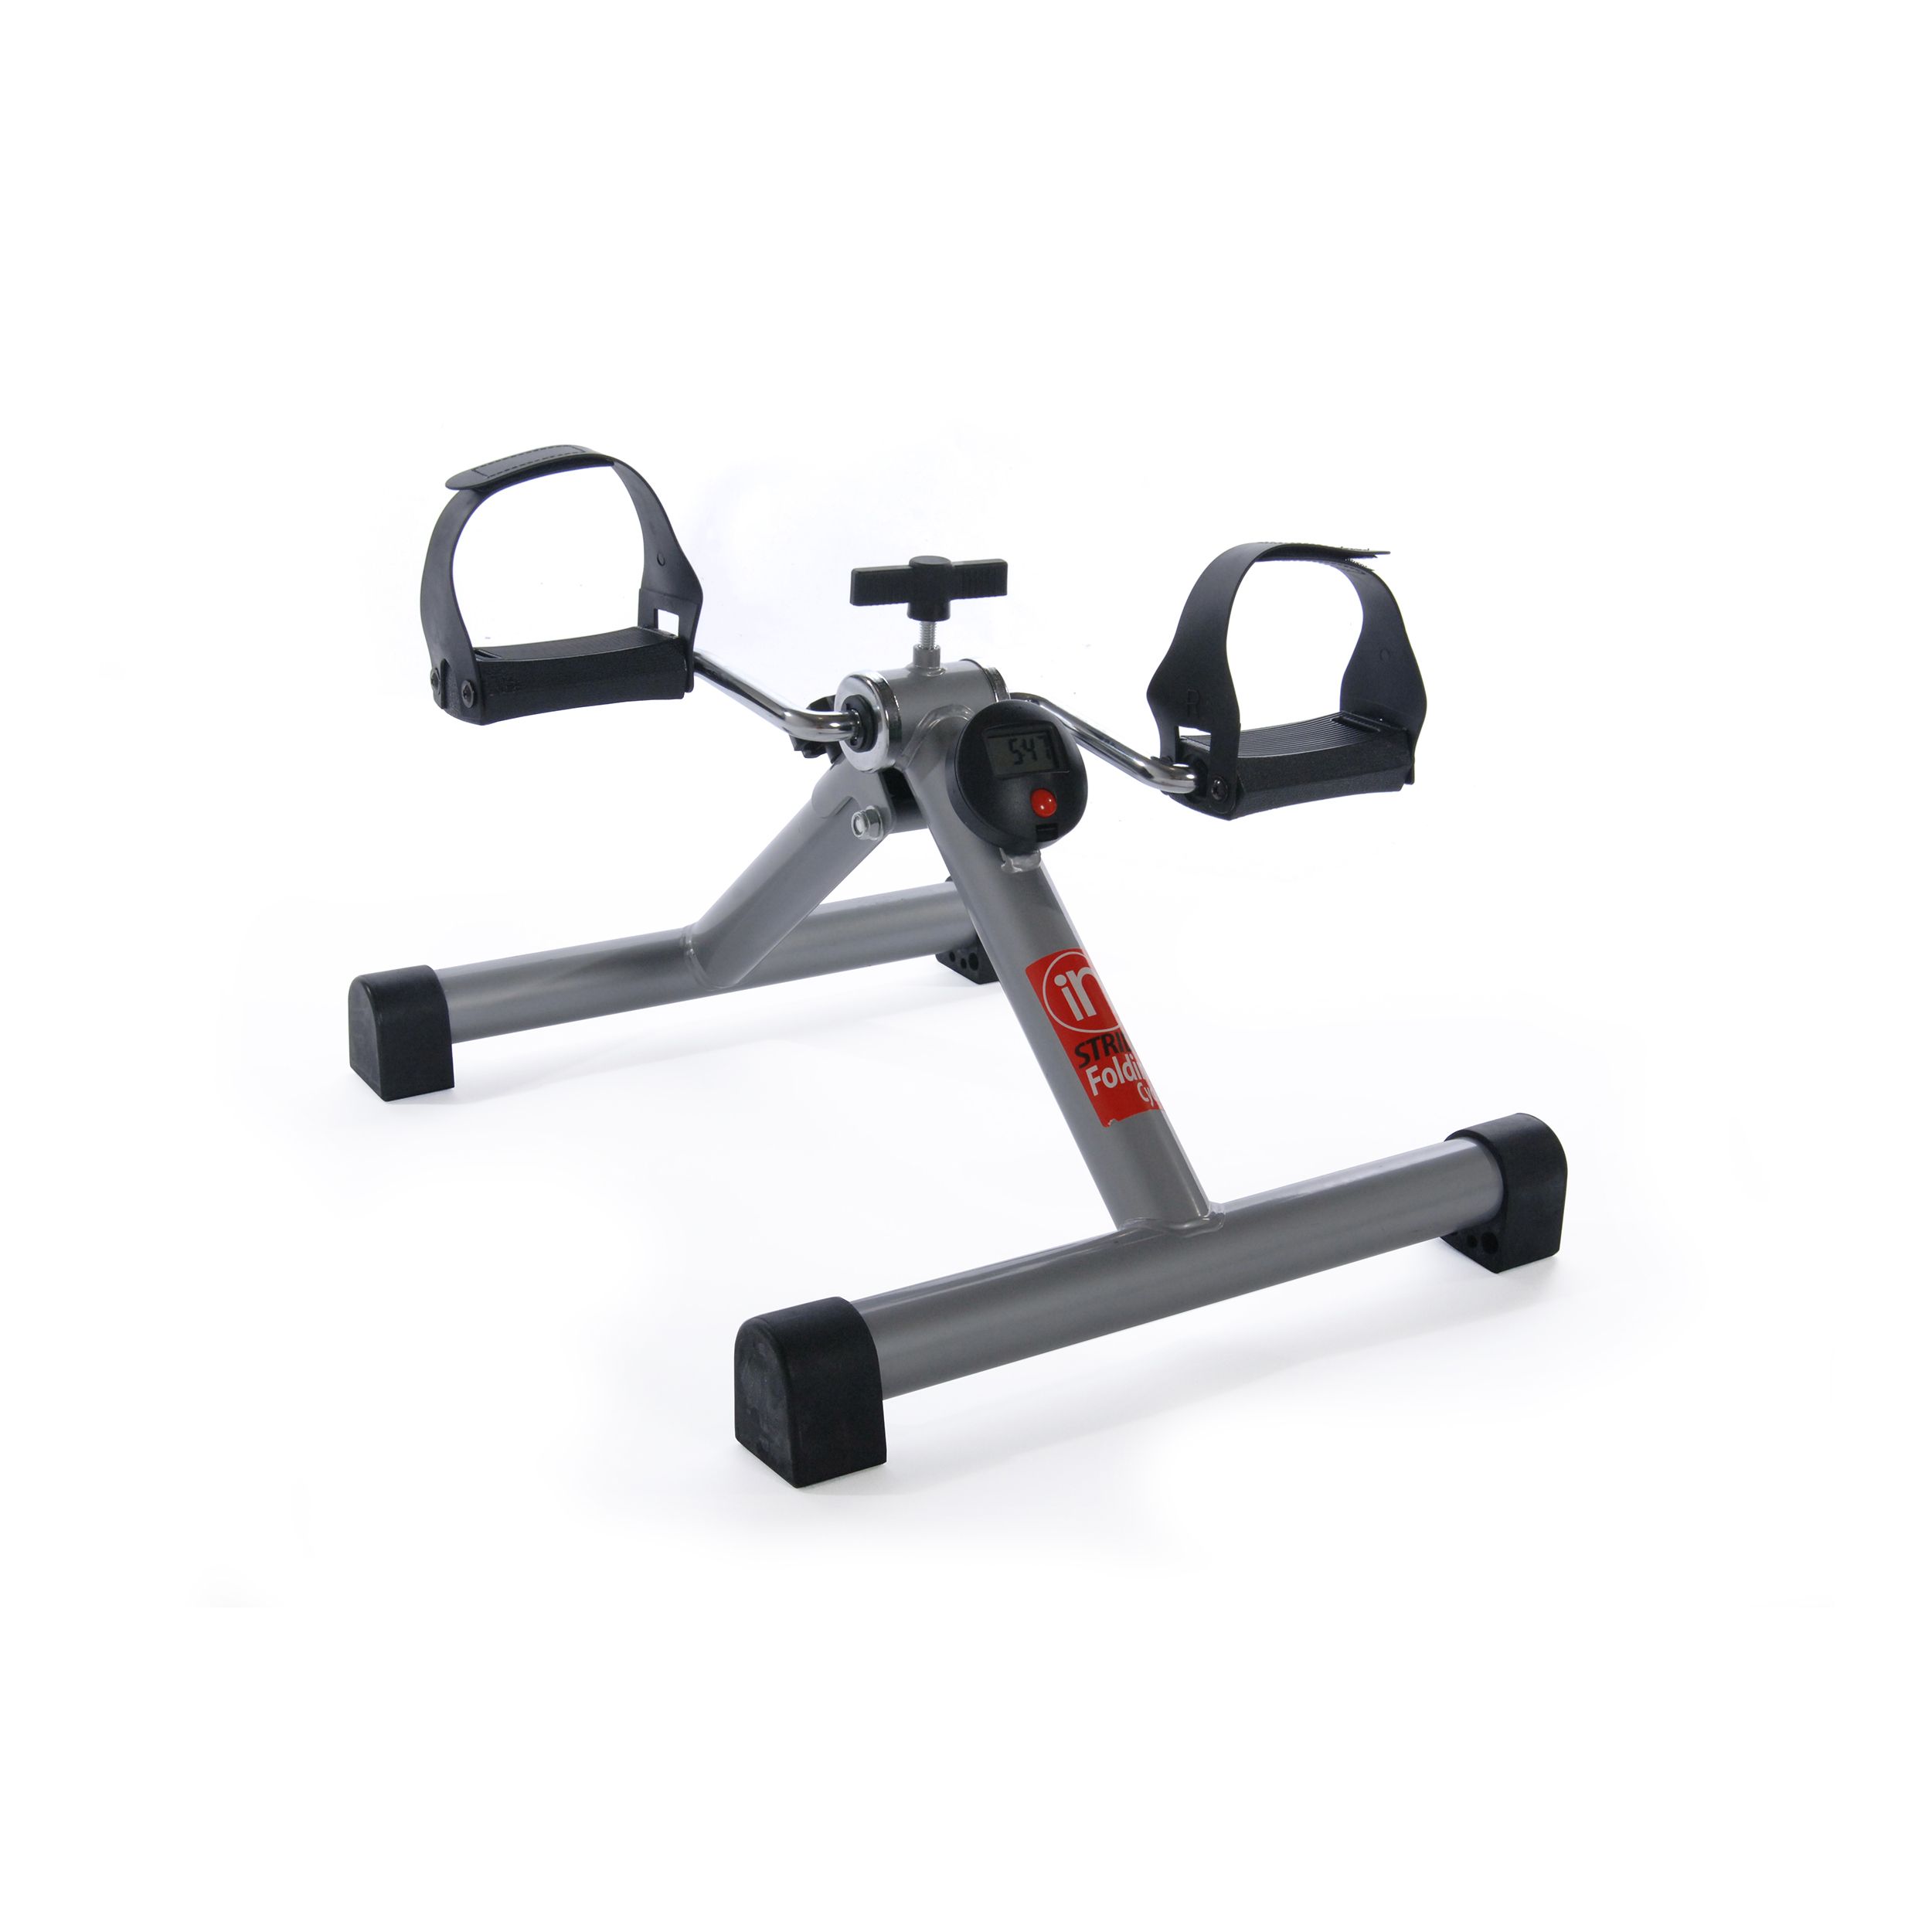 Exerciser Bike Adjustable Arm Leg Foot Resistance Folding Cycle Pedal Trainer 